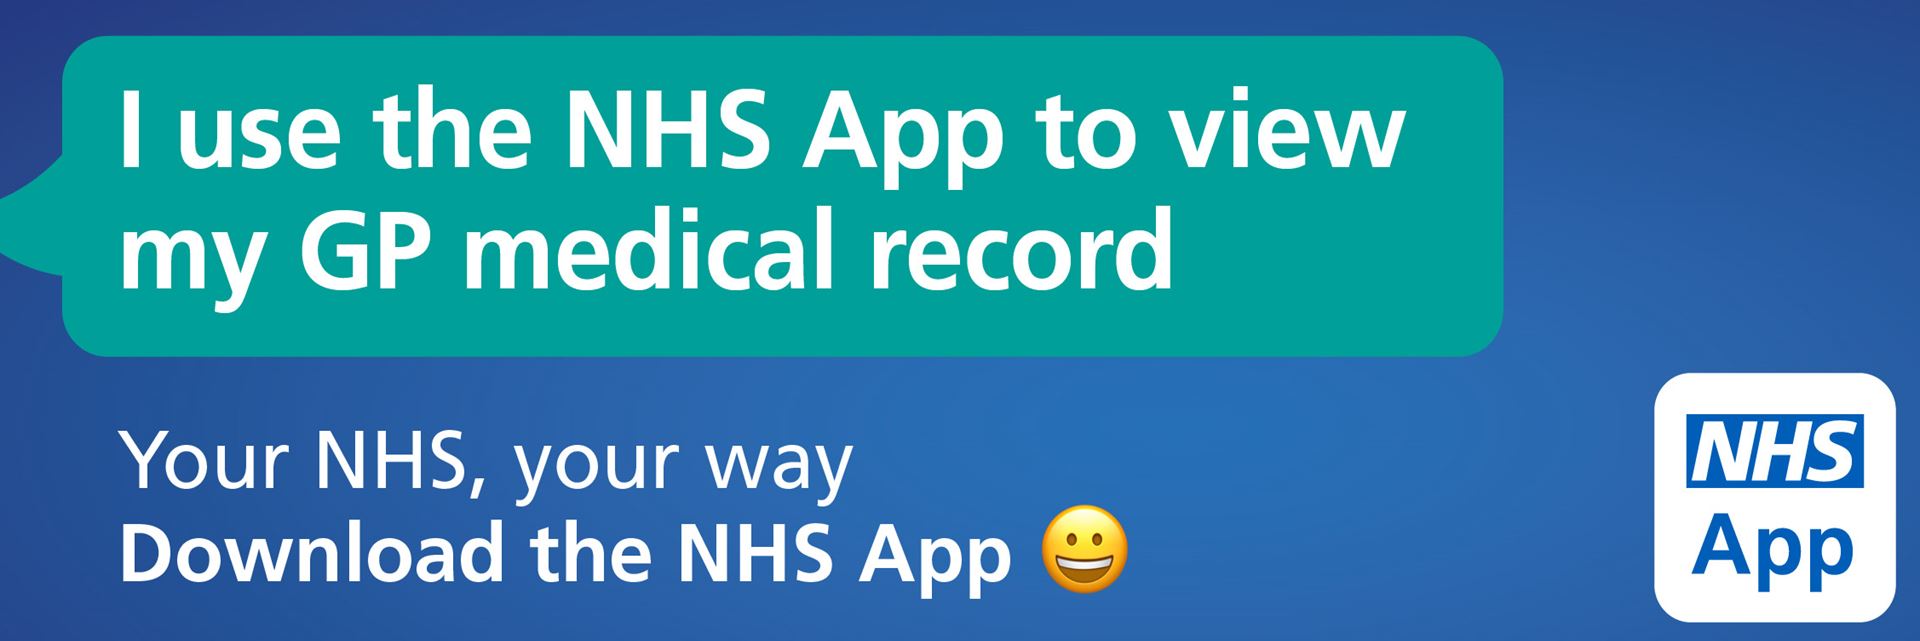 NHS App GP medical record